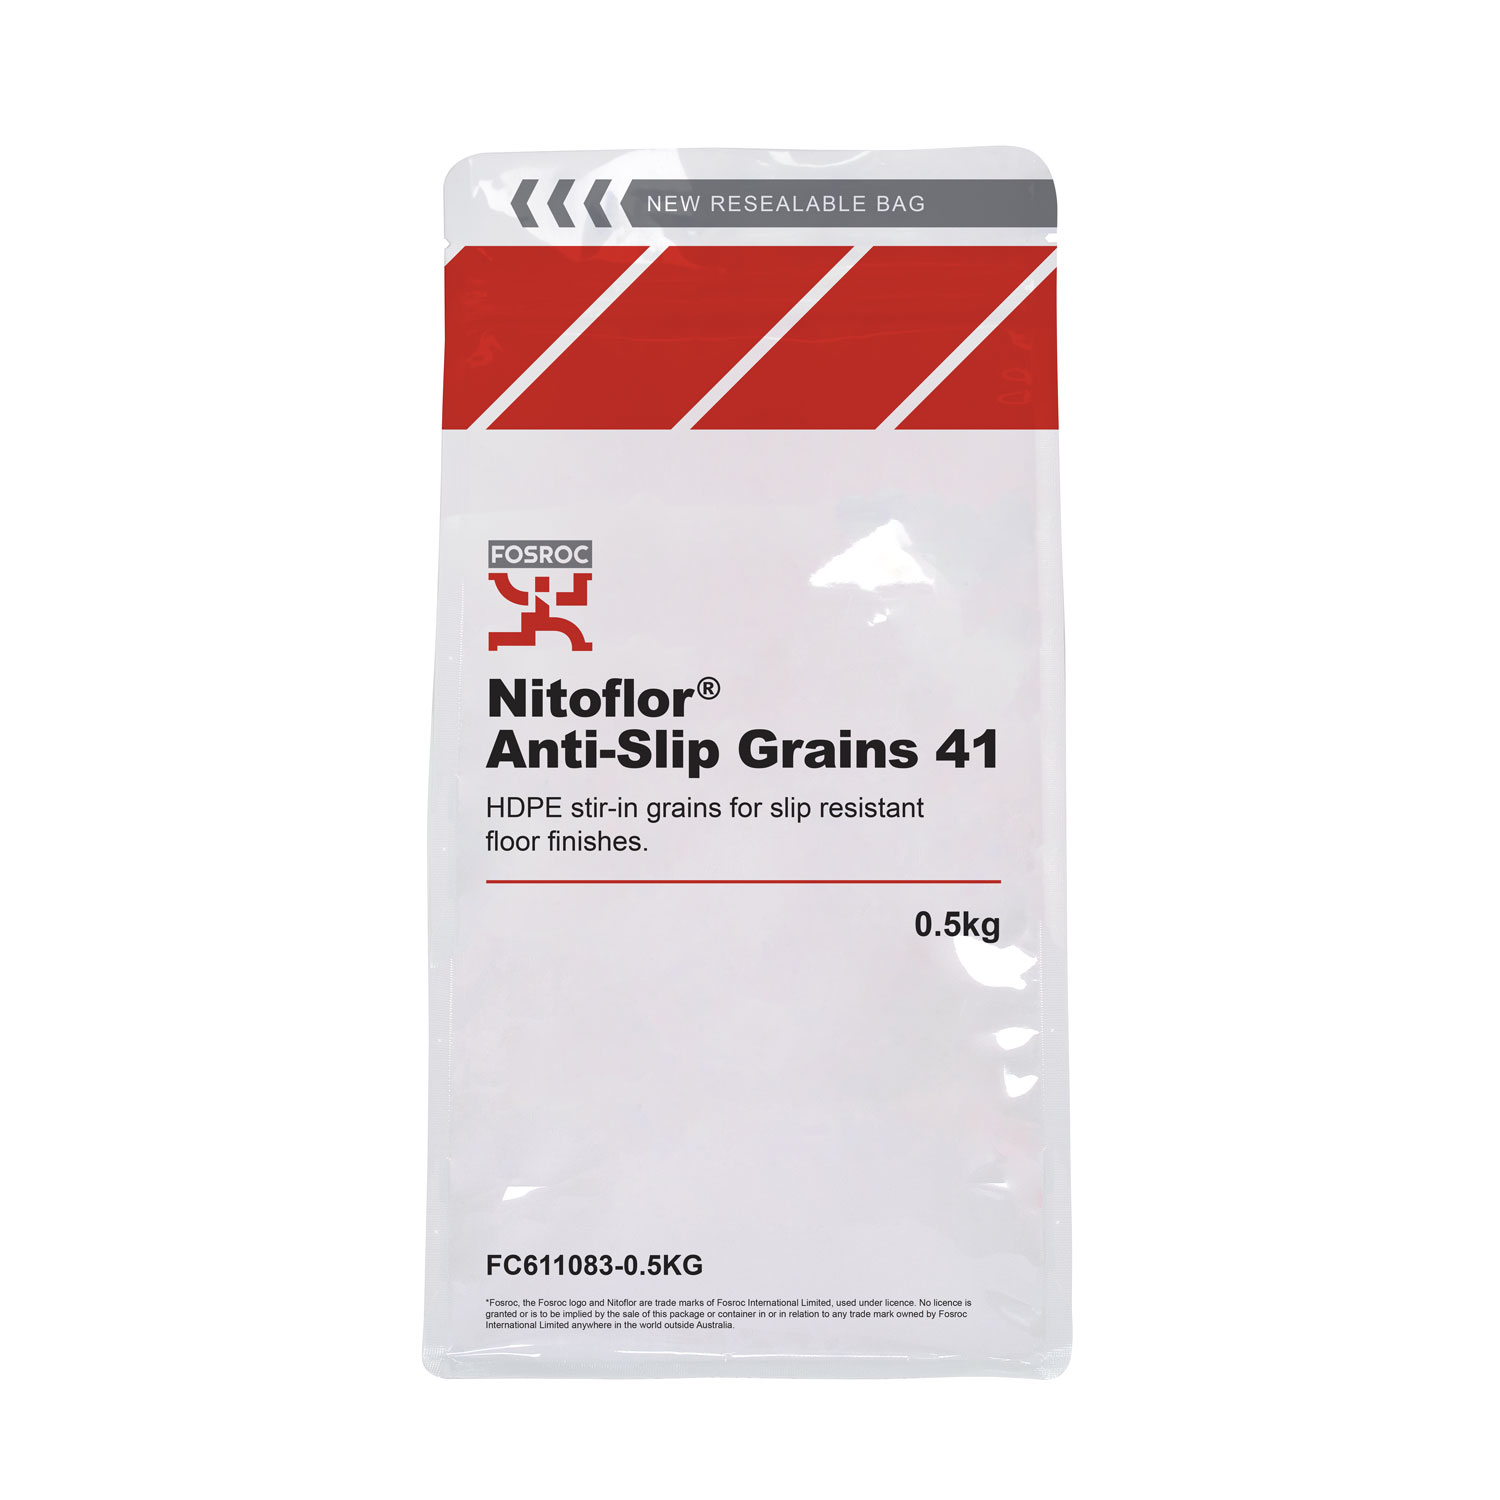 Nitoflor Anti-Slip Grains 41